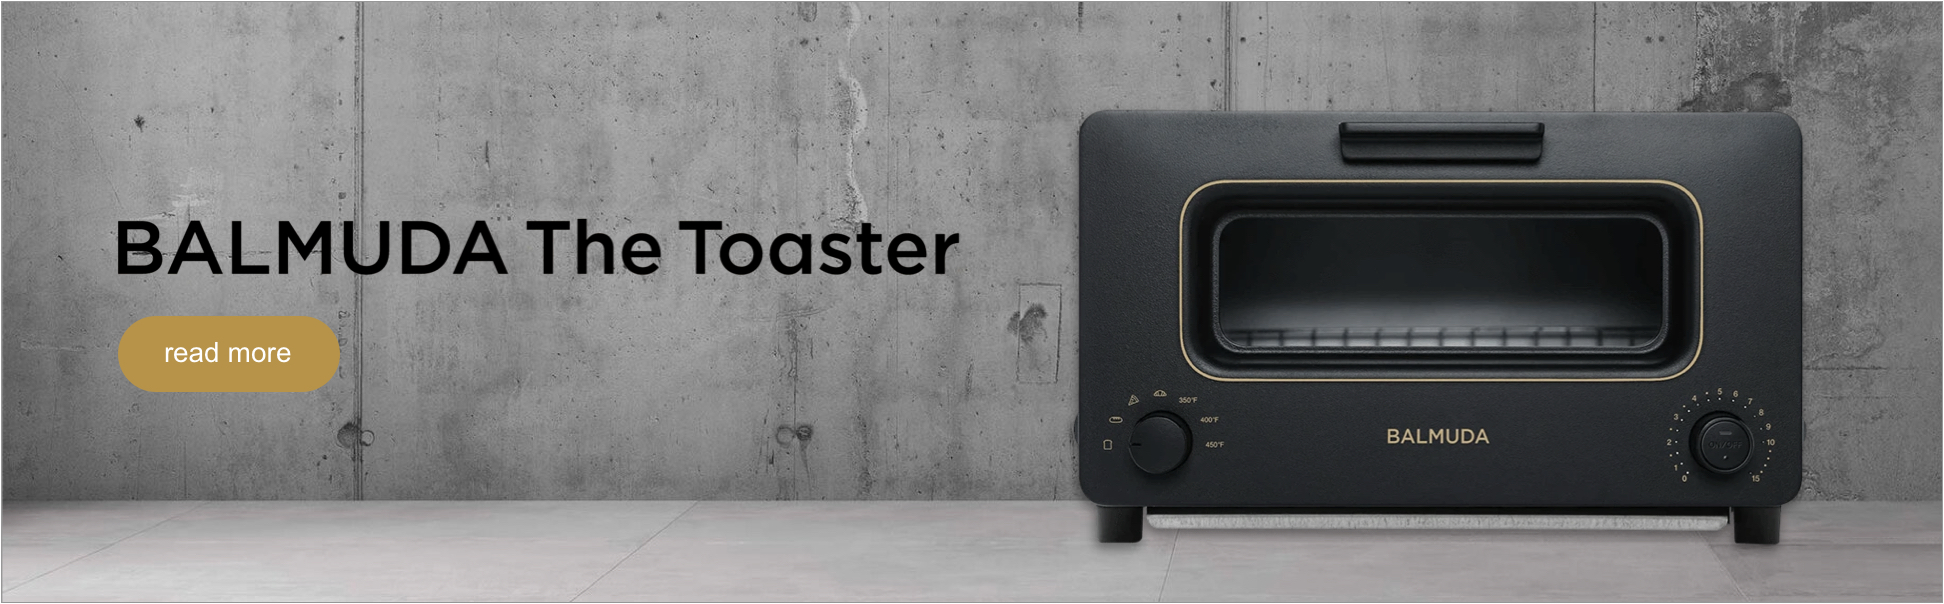 Balmuda Toaster - Image